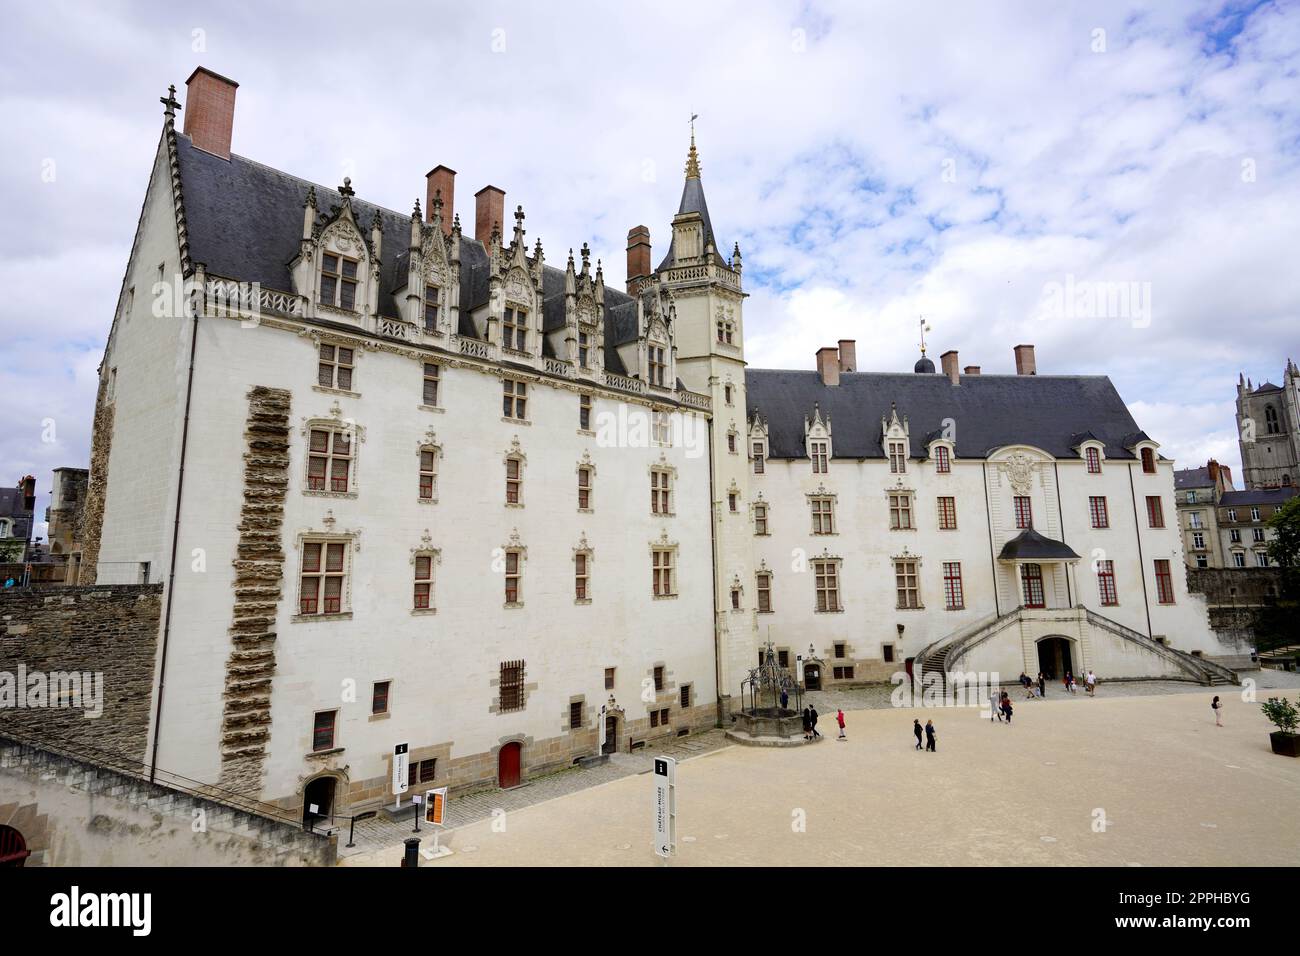 NANTES, FRANKREICH - 5. JUNI 2022: Schloss des ducs de Bretagne im Inneren des Schlosses in Nantes, Frankreich Stockfoto